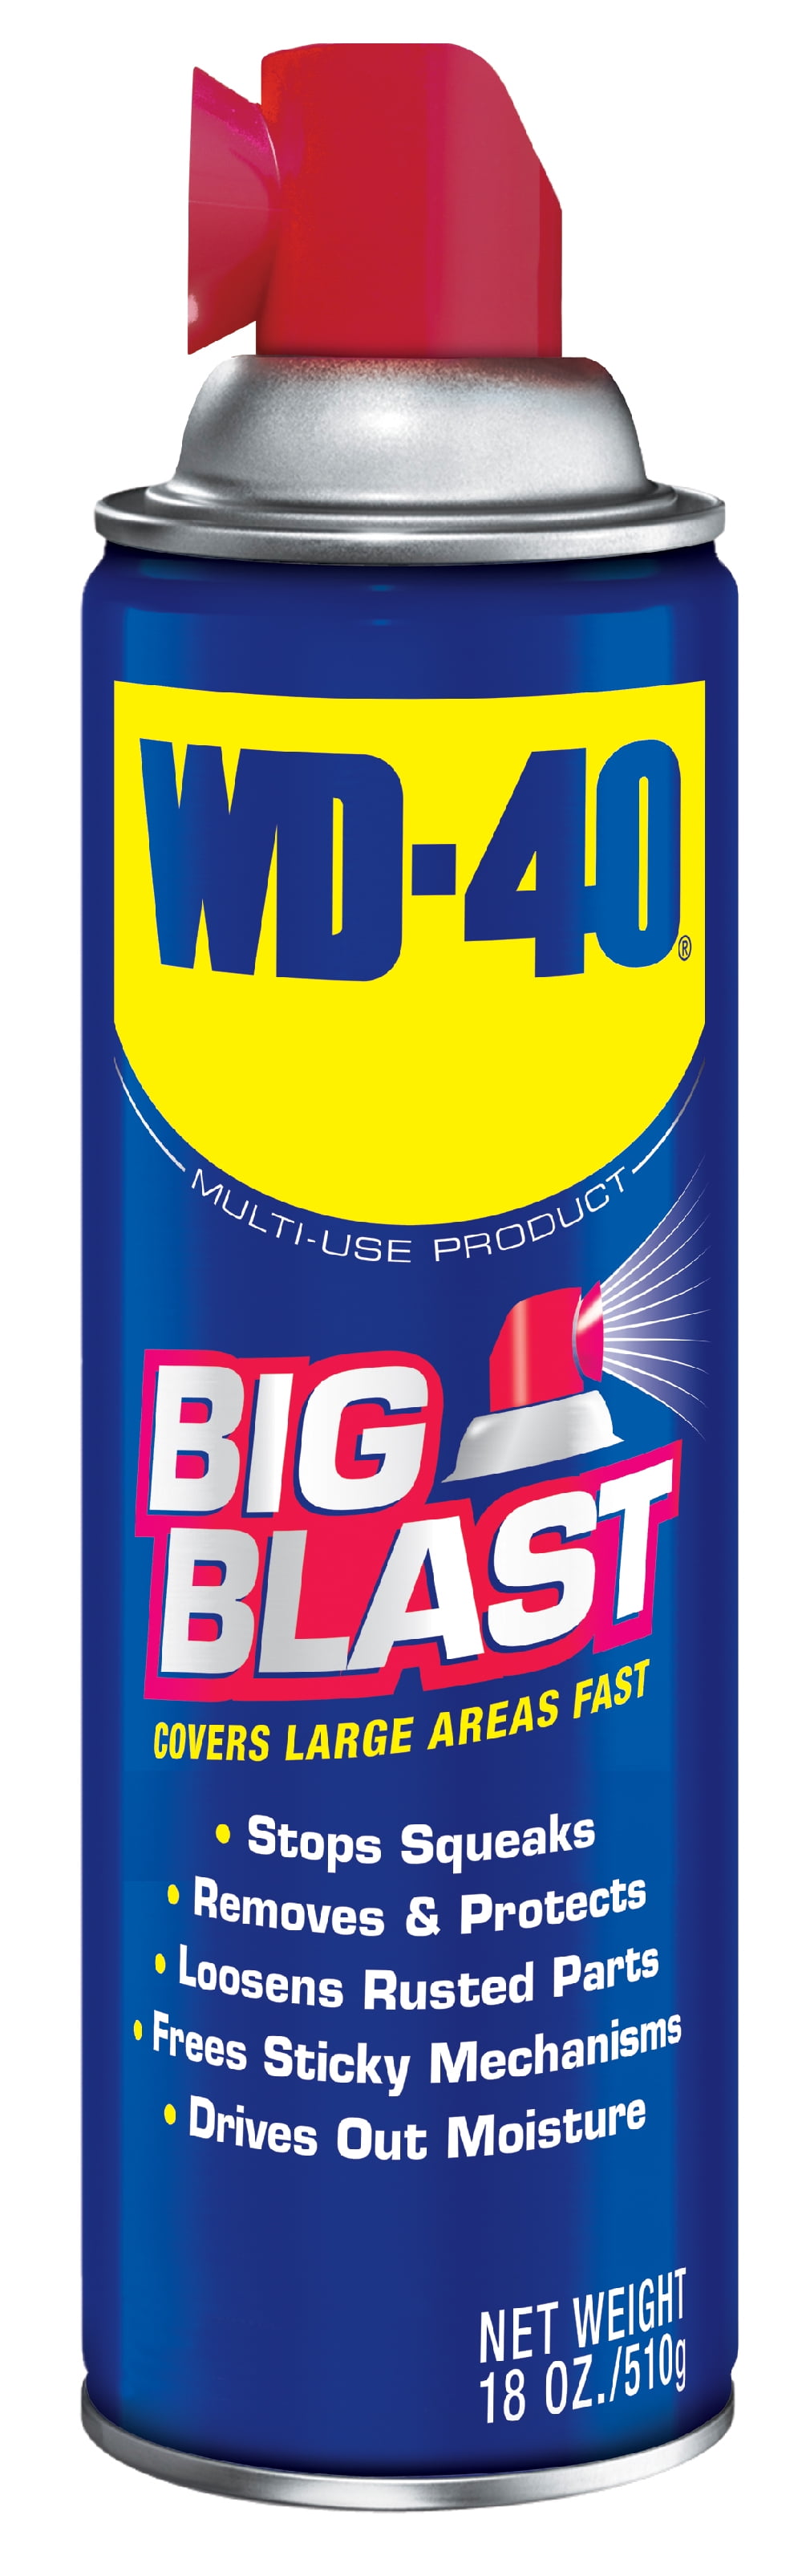 Original WD-40 Formula, Multi-Use Product Big-Blast, Multi-Purpose Lubricant with Wide Nozzle Spray, 18oz